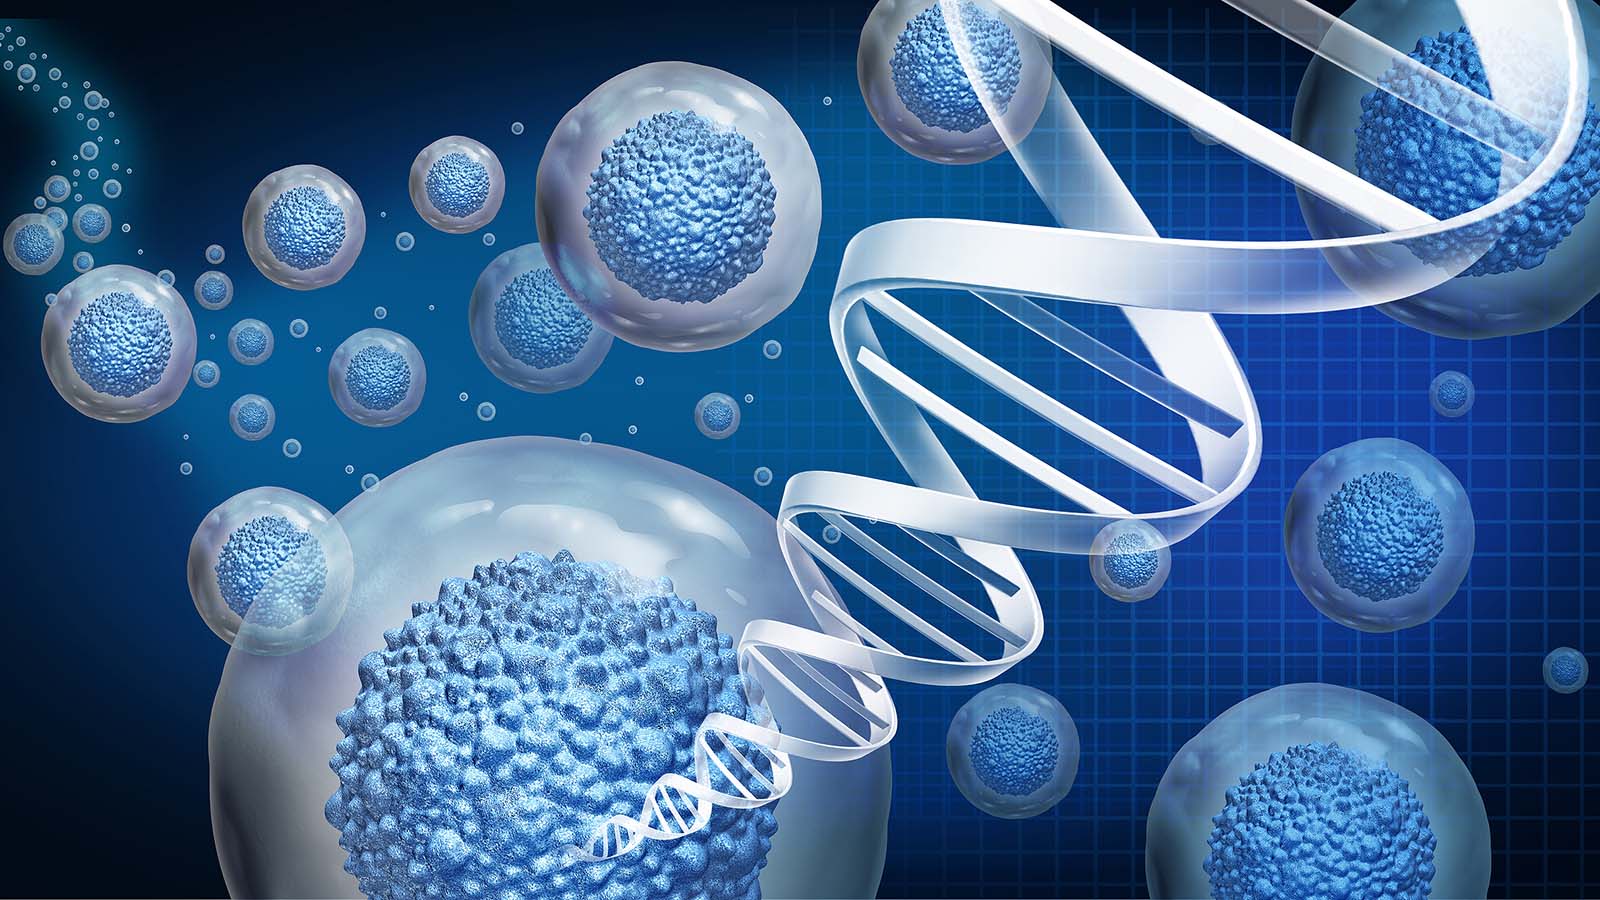 A rendering of DNA entering a cell, representing regenerative medicine